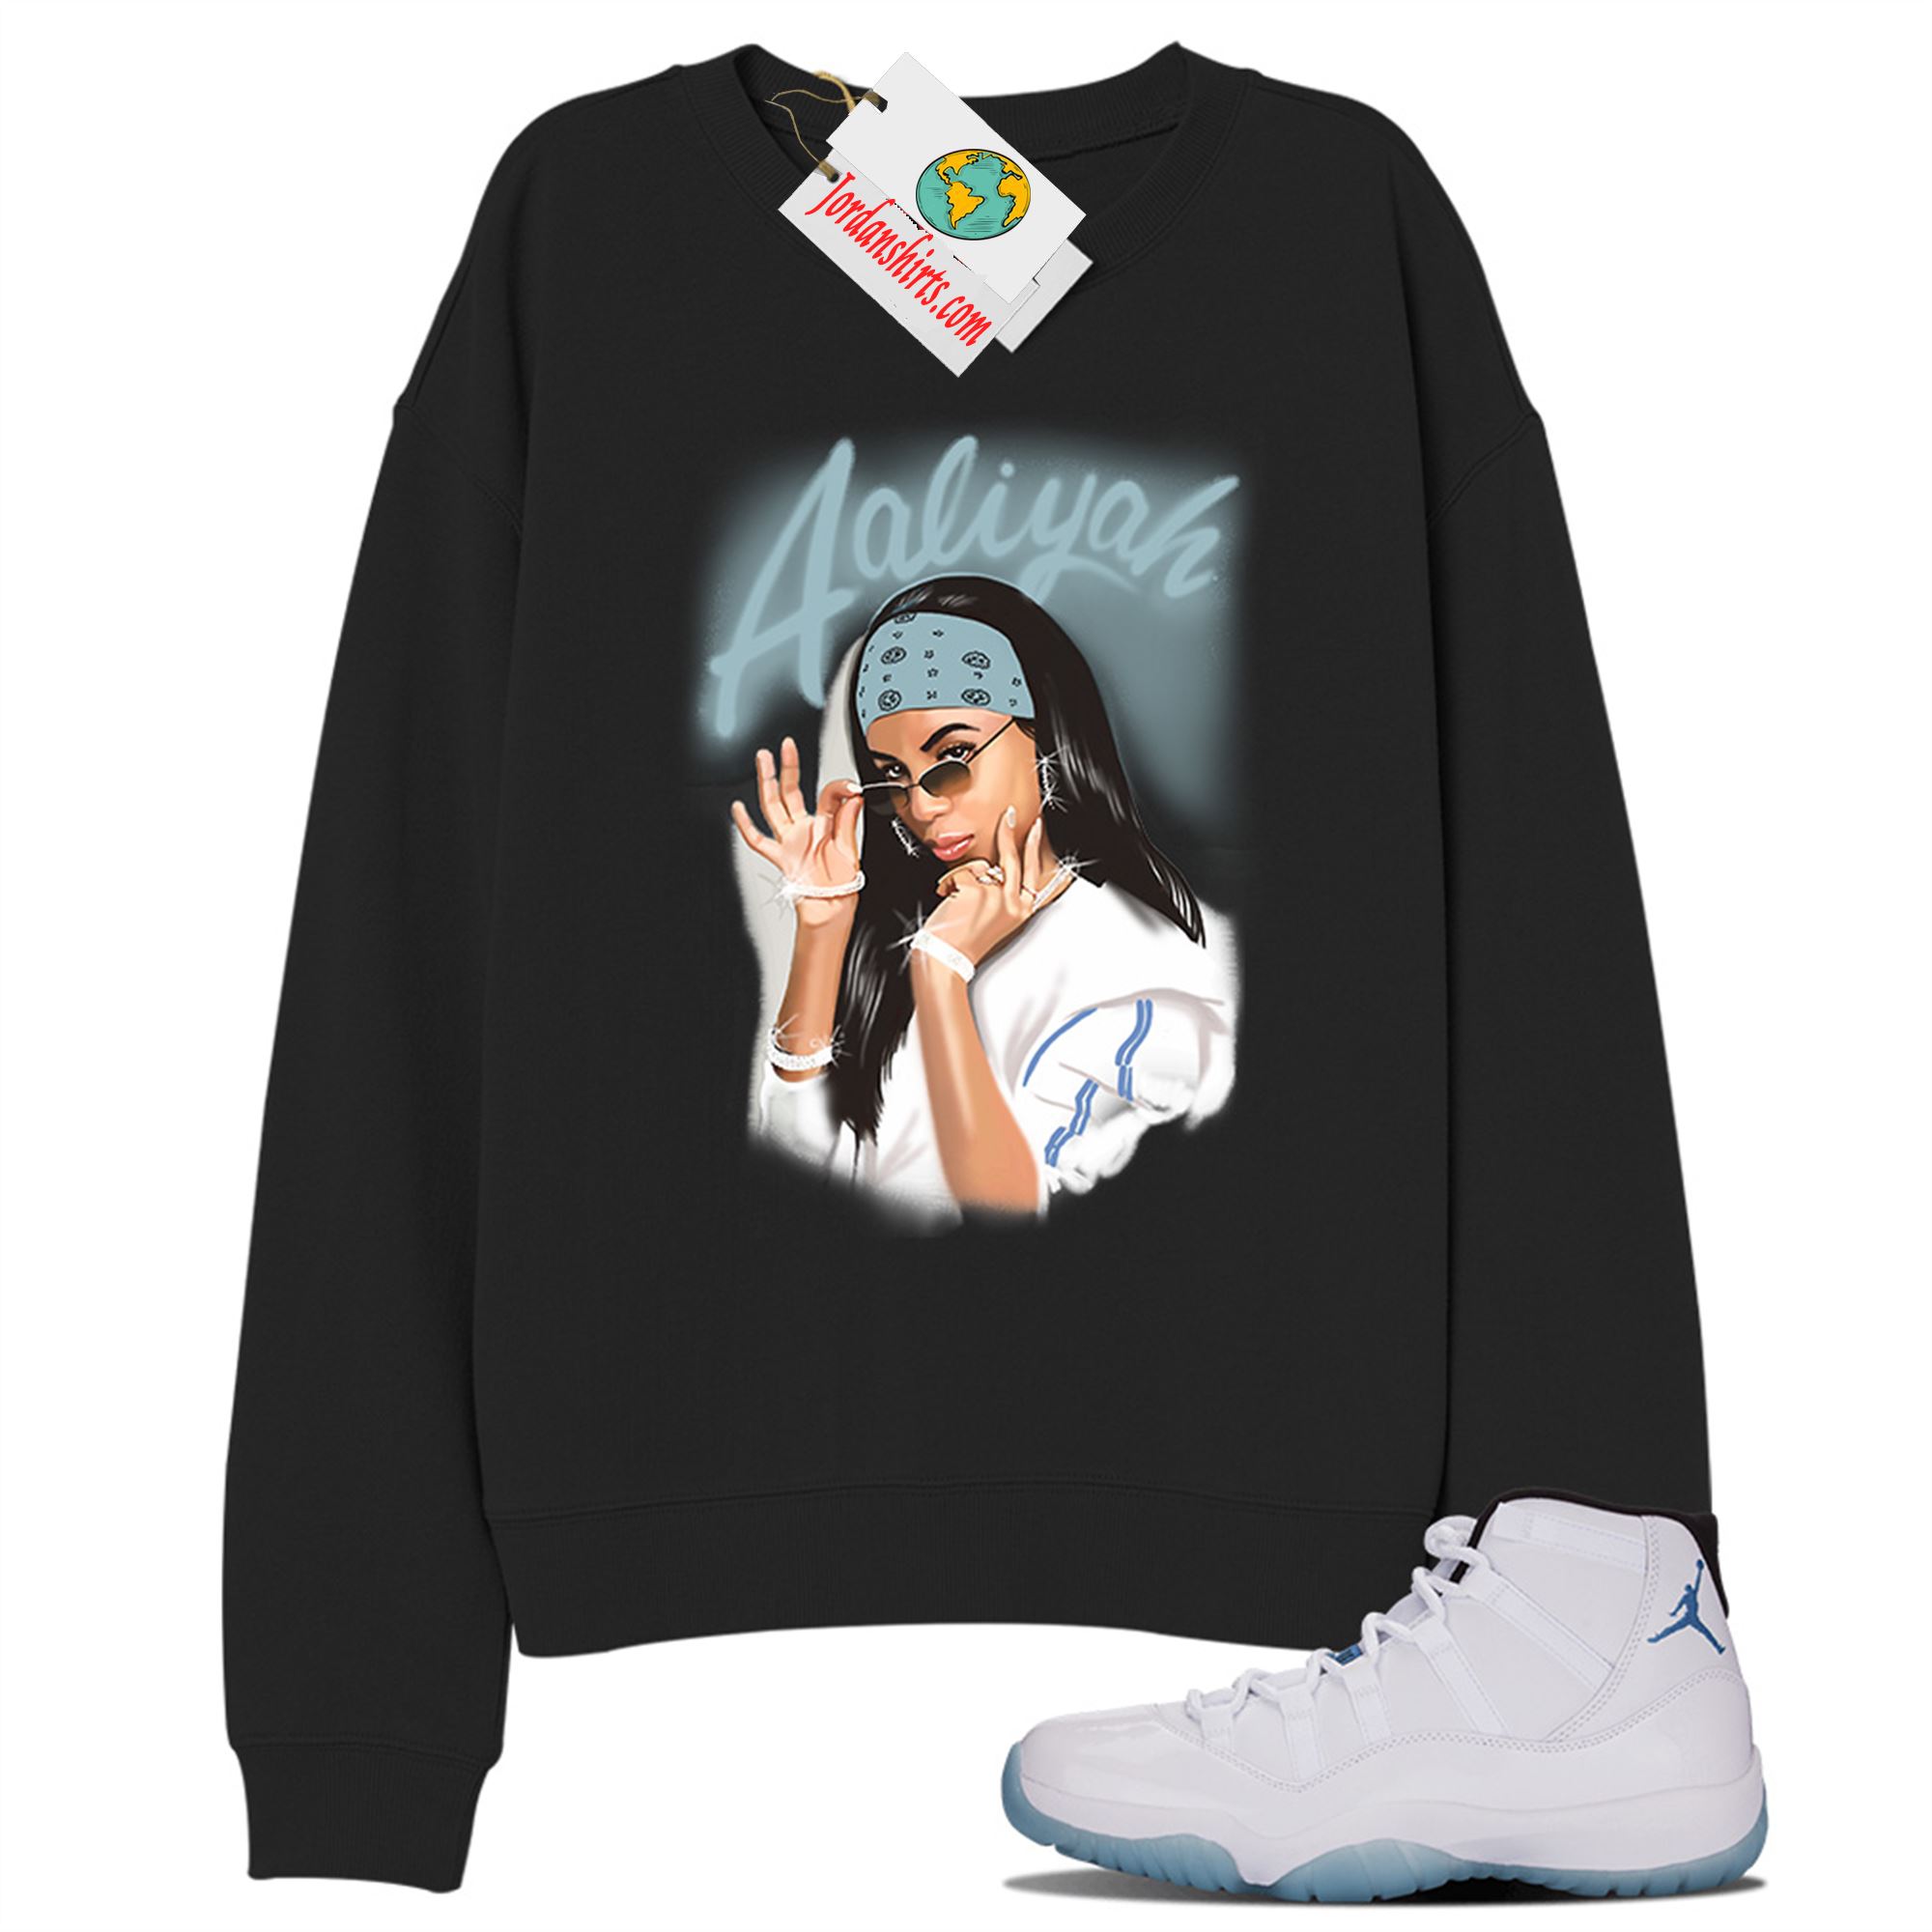 Jordan 11 Sweatshirt, Aaliyah Airbrush Black Sweatshirt Air Jordan 11 Legend Blue 11s Size Up To 5xl